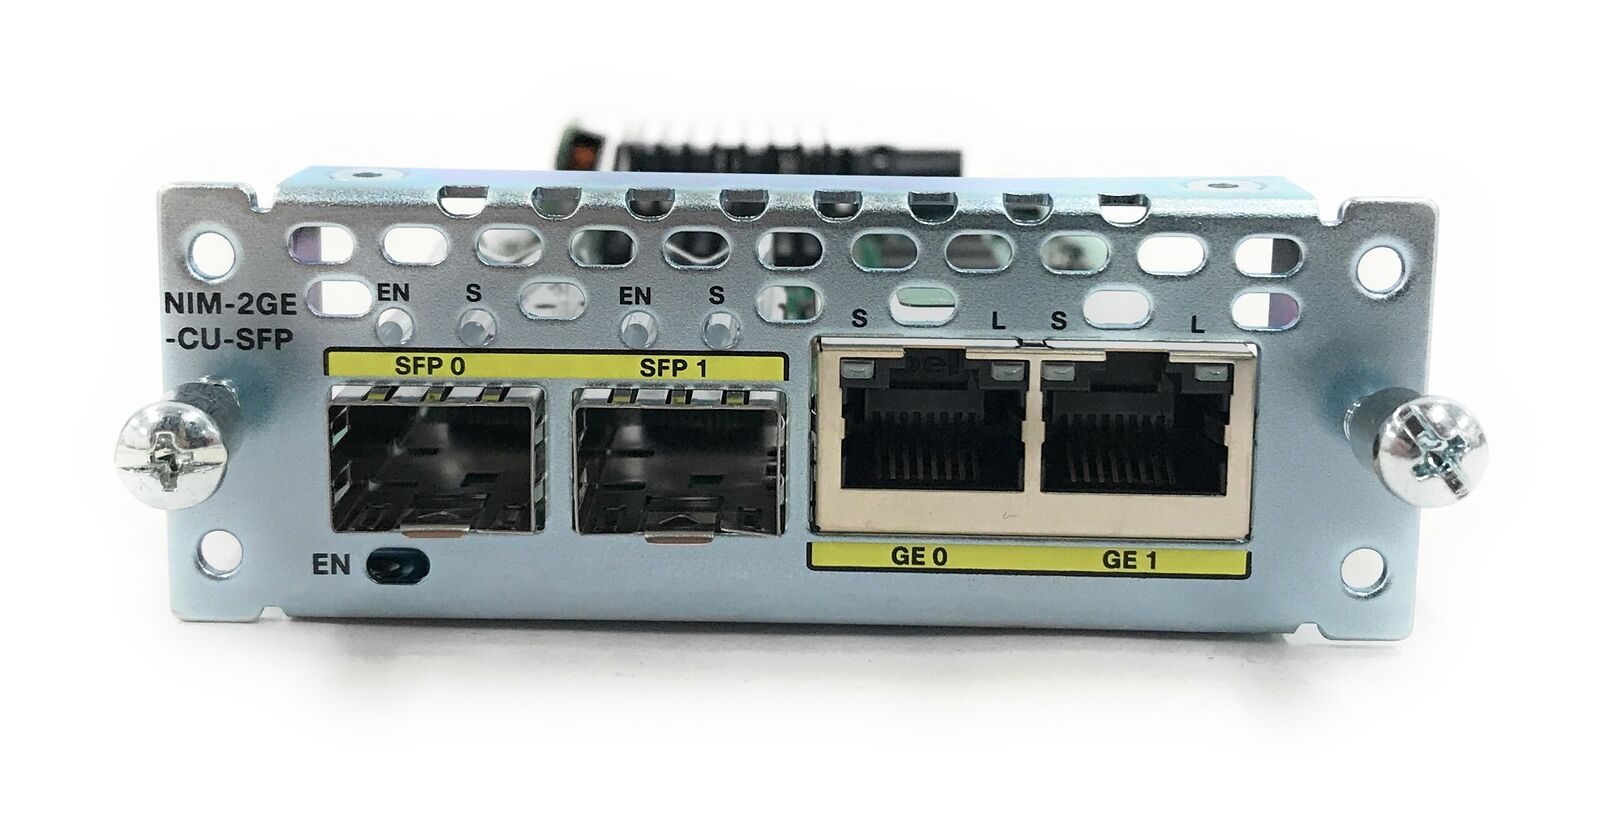 NEW Open Box Cisco NIM-2GE-CU-SFP 2-Port GbE Dual-Mode GE/SFP WAN Switch Module